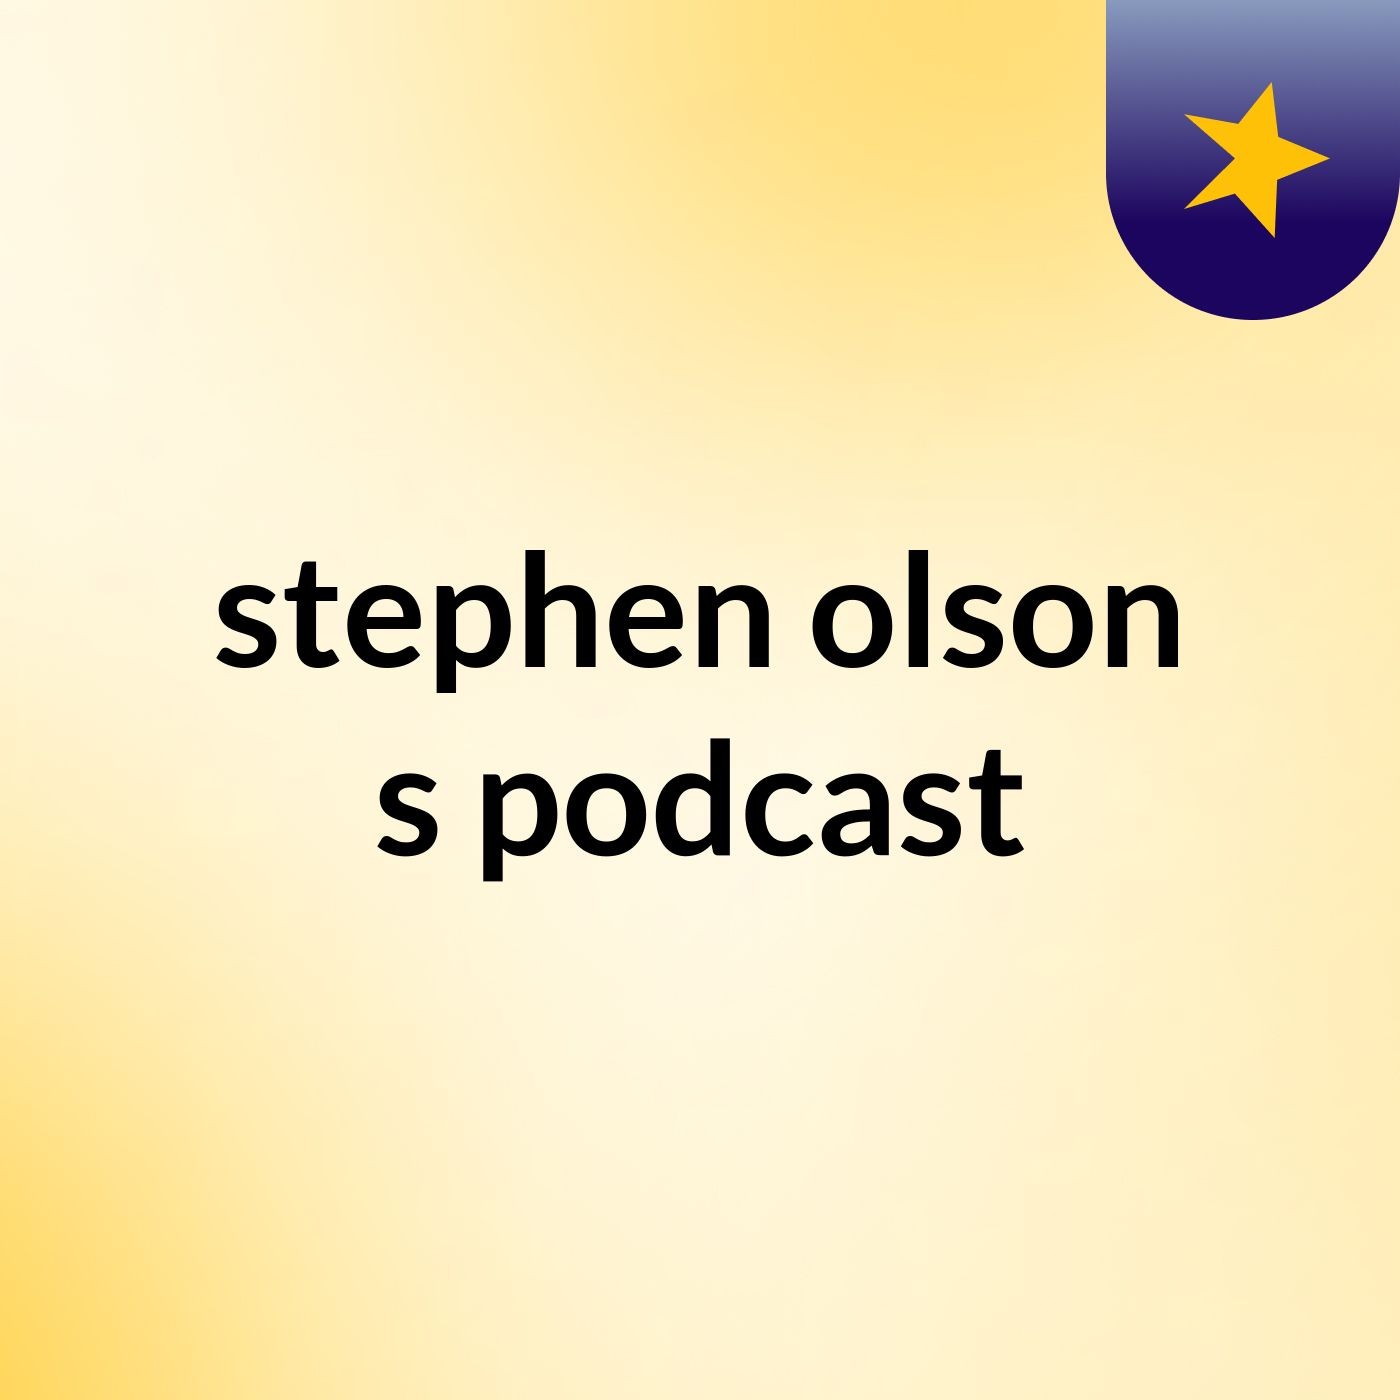 Episode 7 - stephen olson's podcast